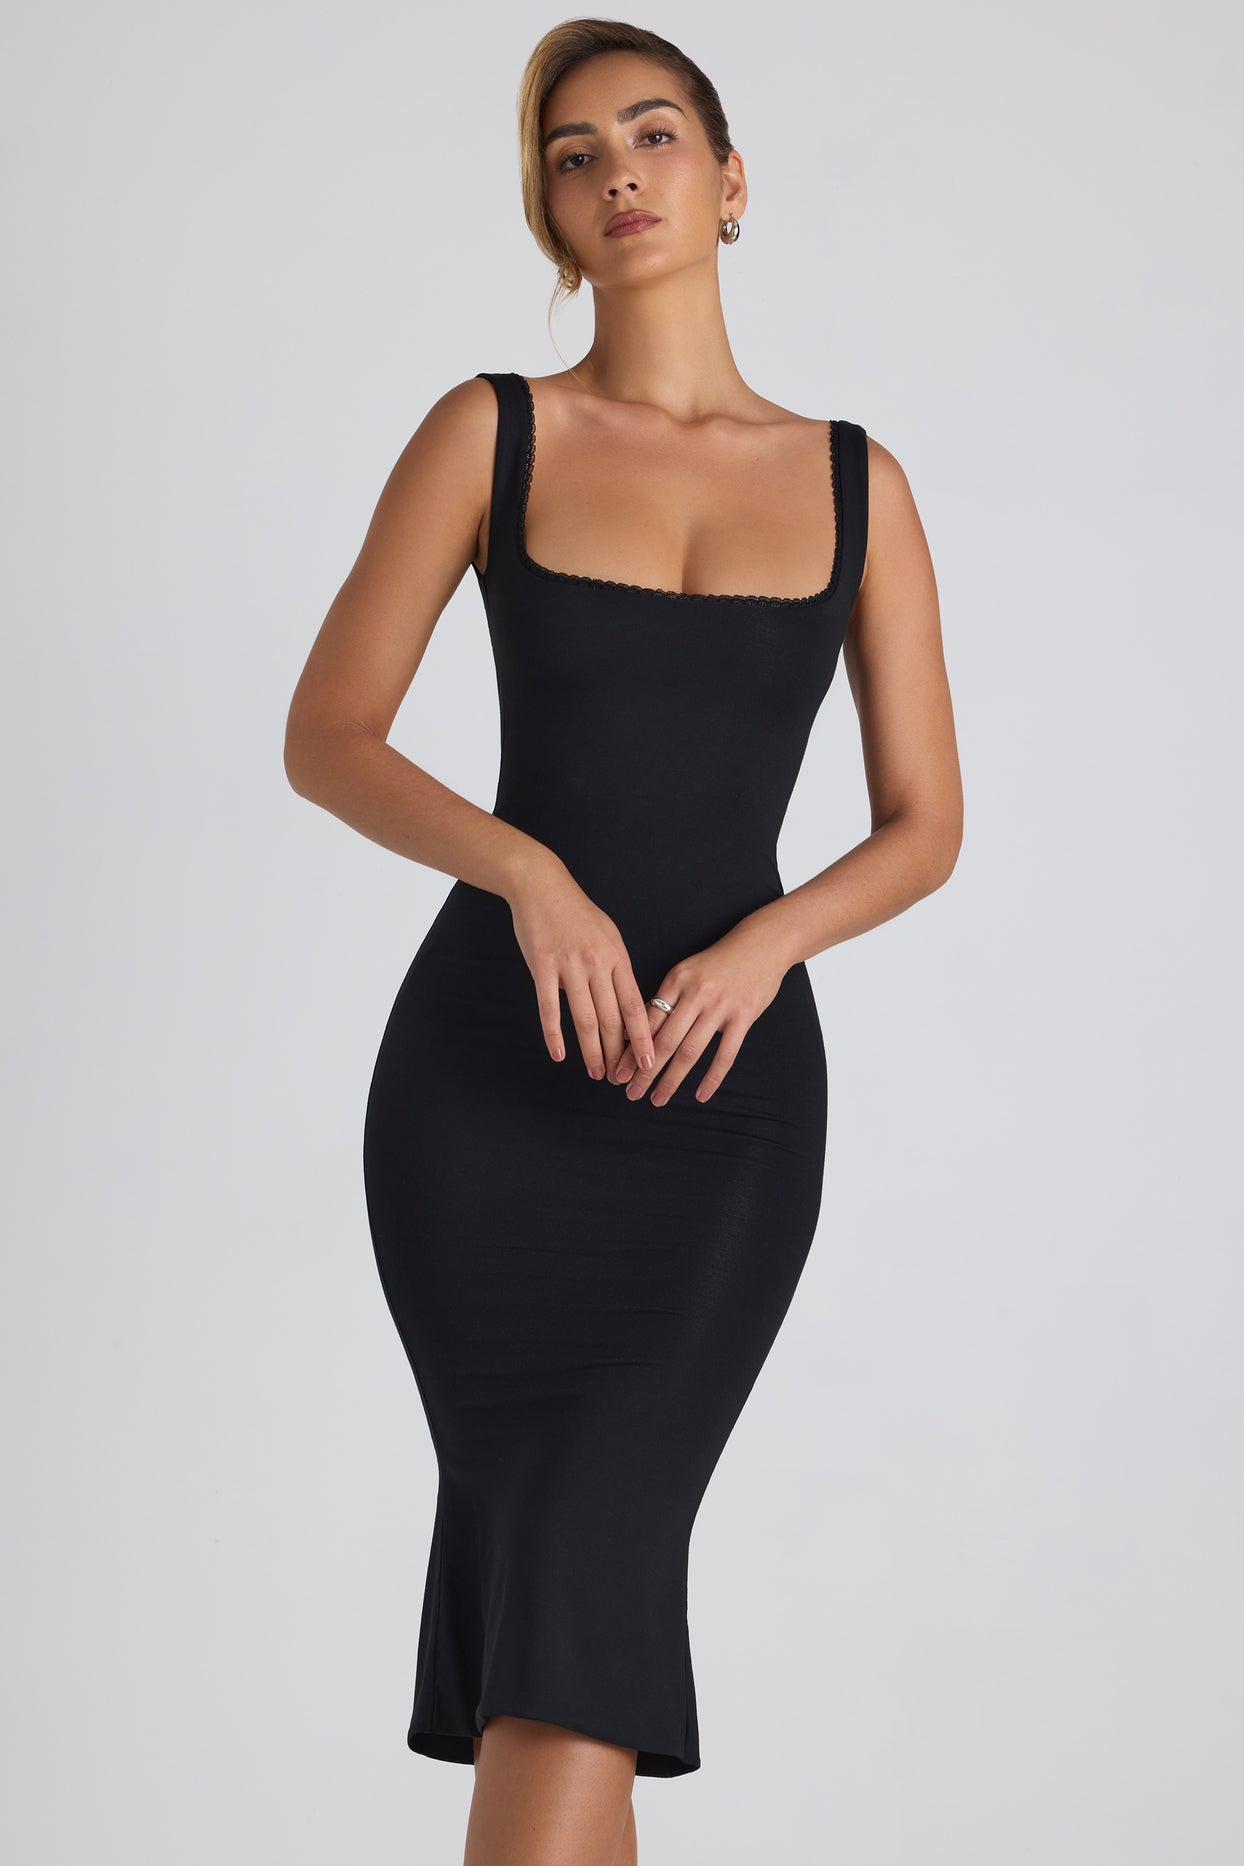 Modal Lace-Trim Midaxi Dress in Black